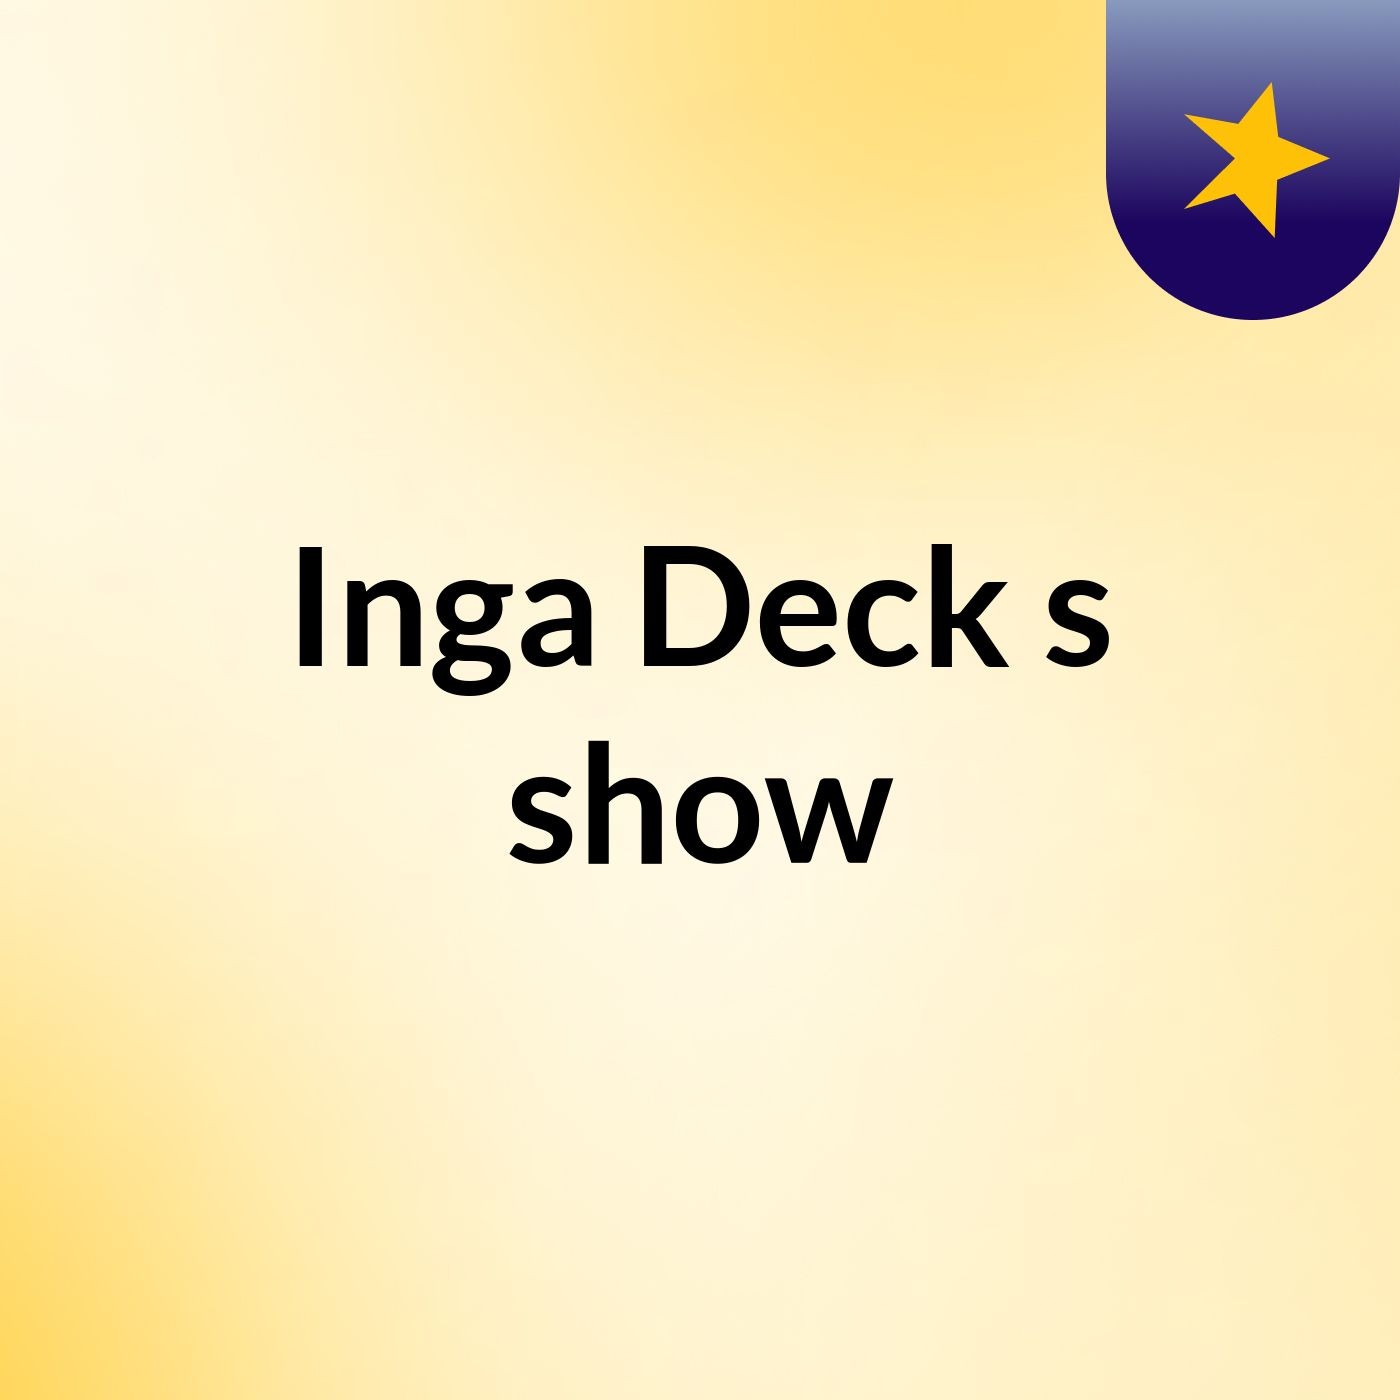 Inga Deck's show